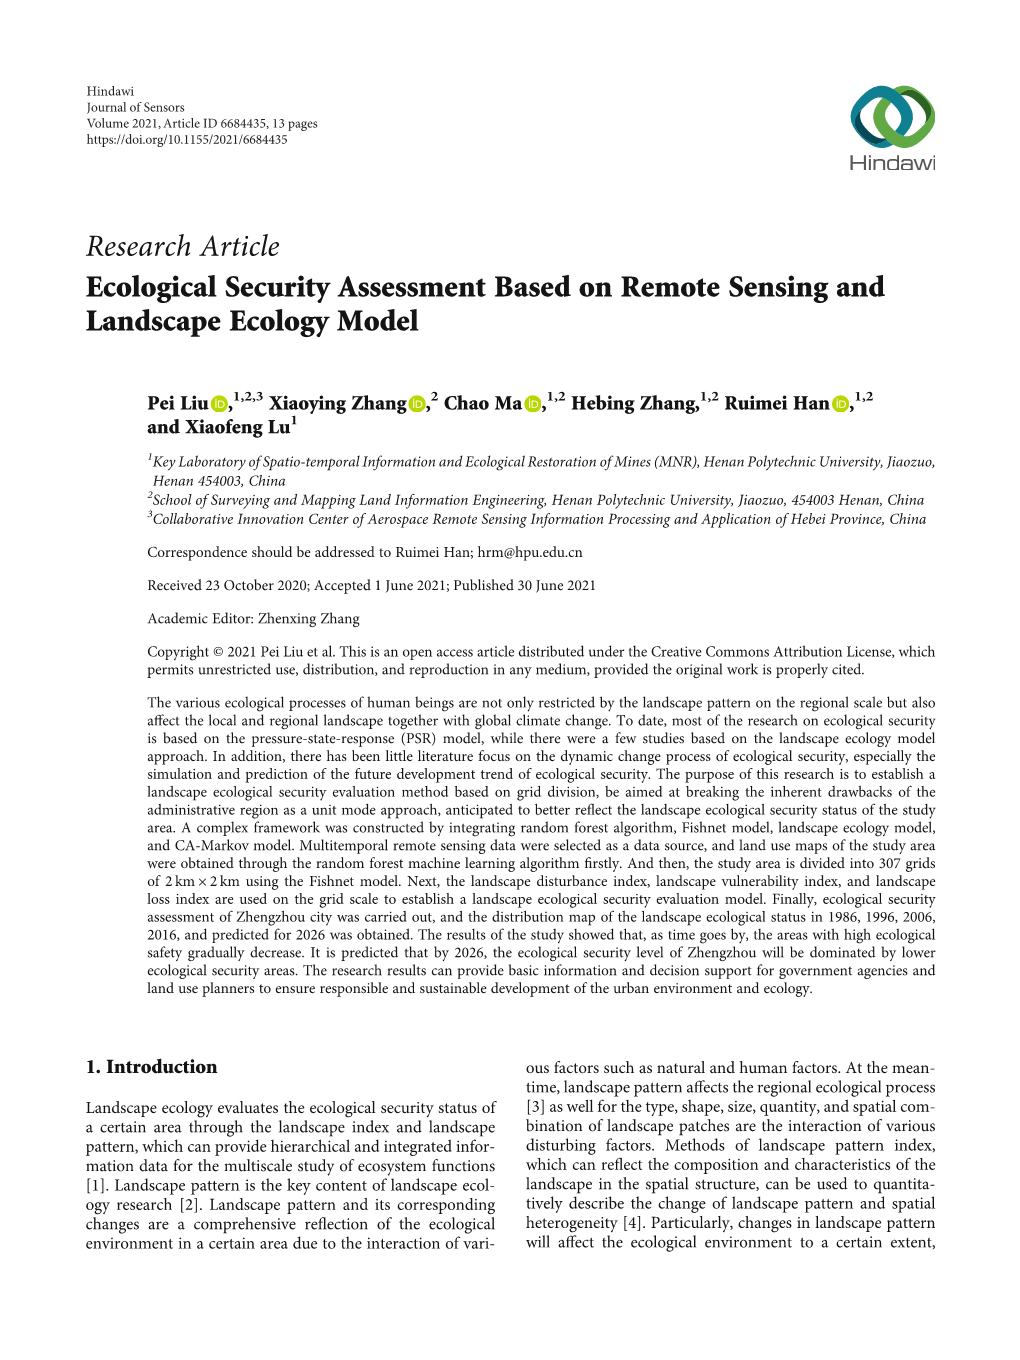 Ecological Security Assessment Based on Remote Sensing and Landscape Ecology Model